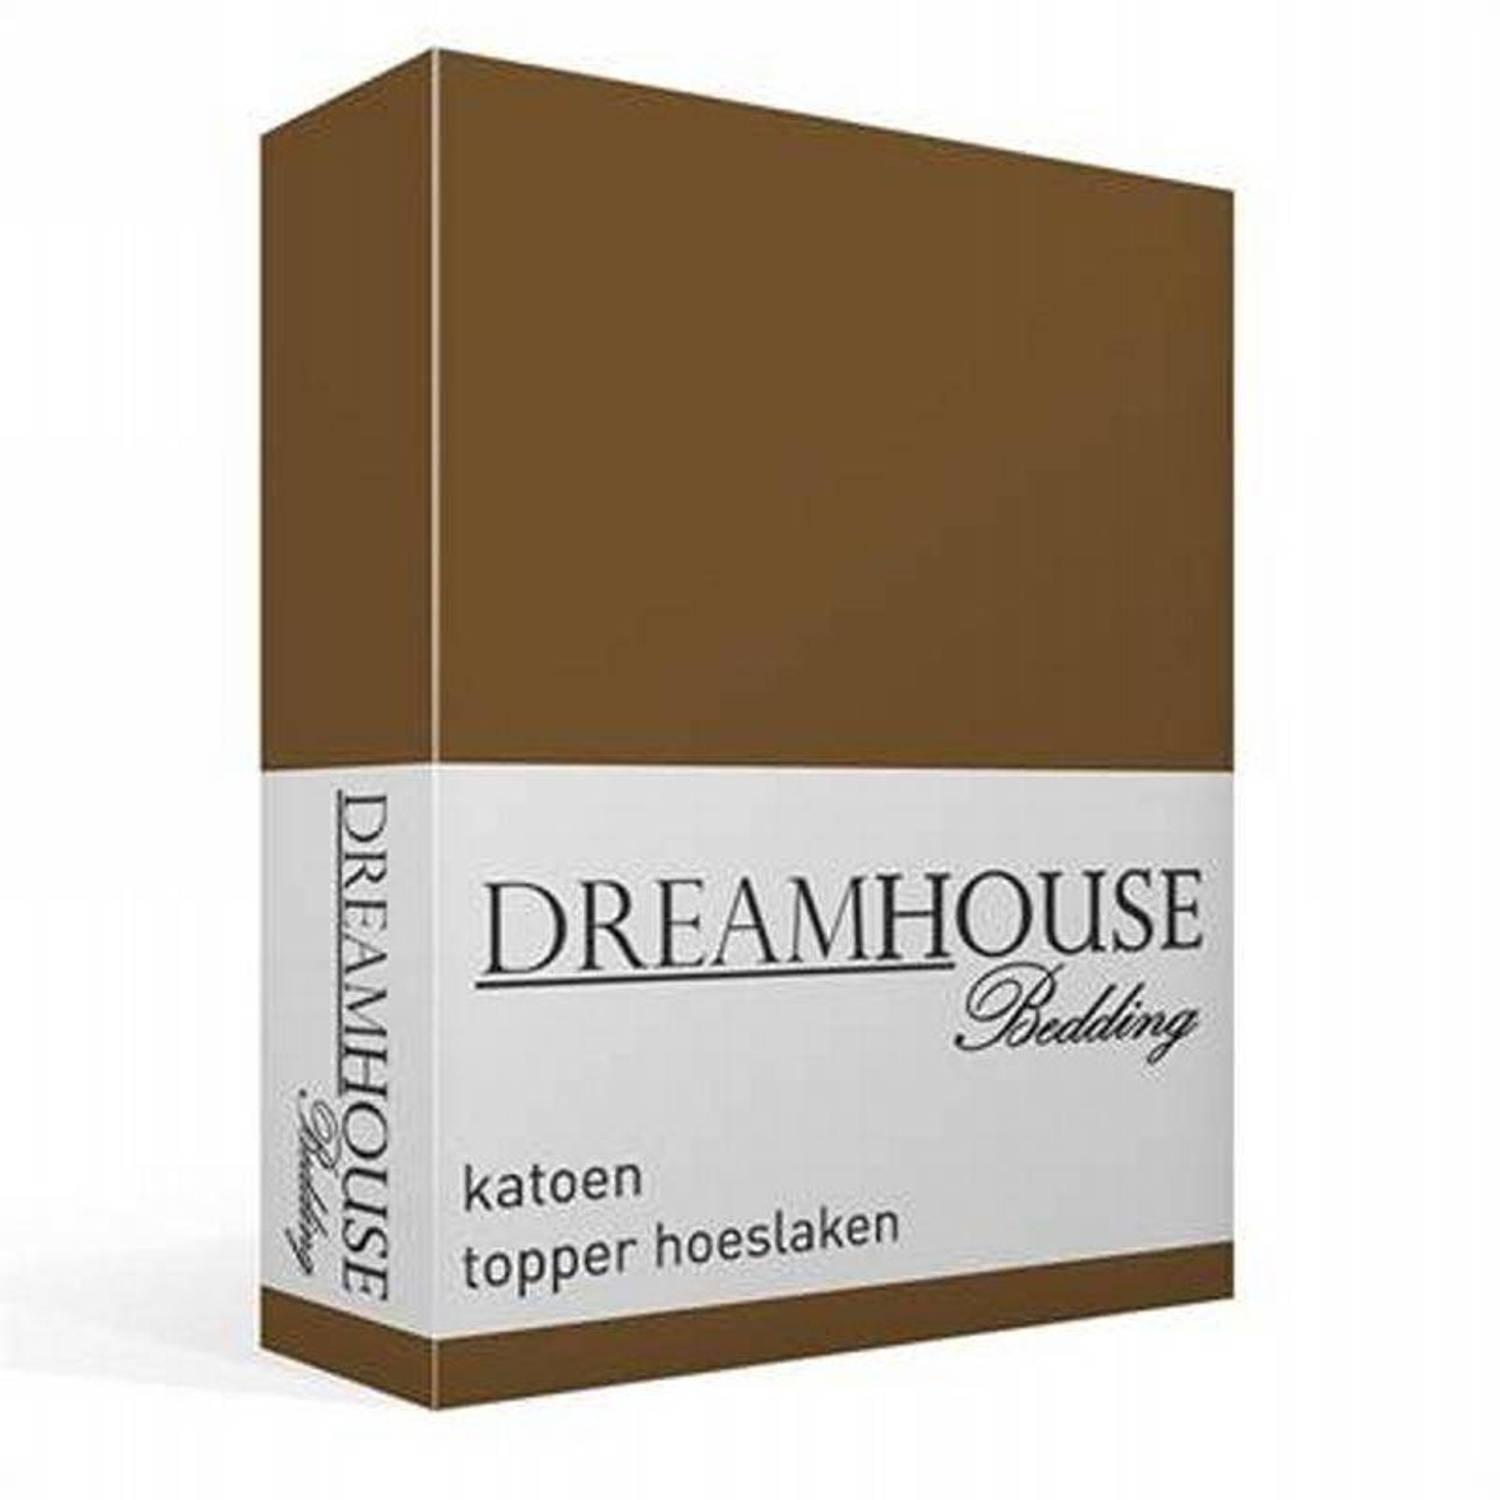 Dreamhouse Bedding katoen topper hoeslaken - 100% katoen - Lits-jumeaux (160x200 cm) - Taupe